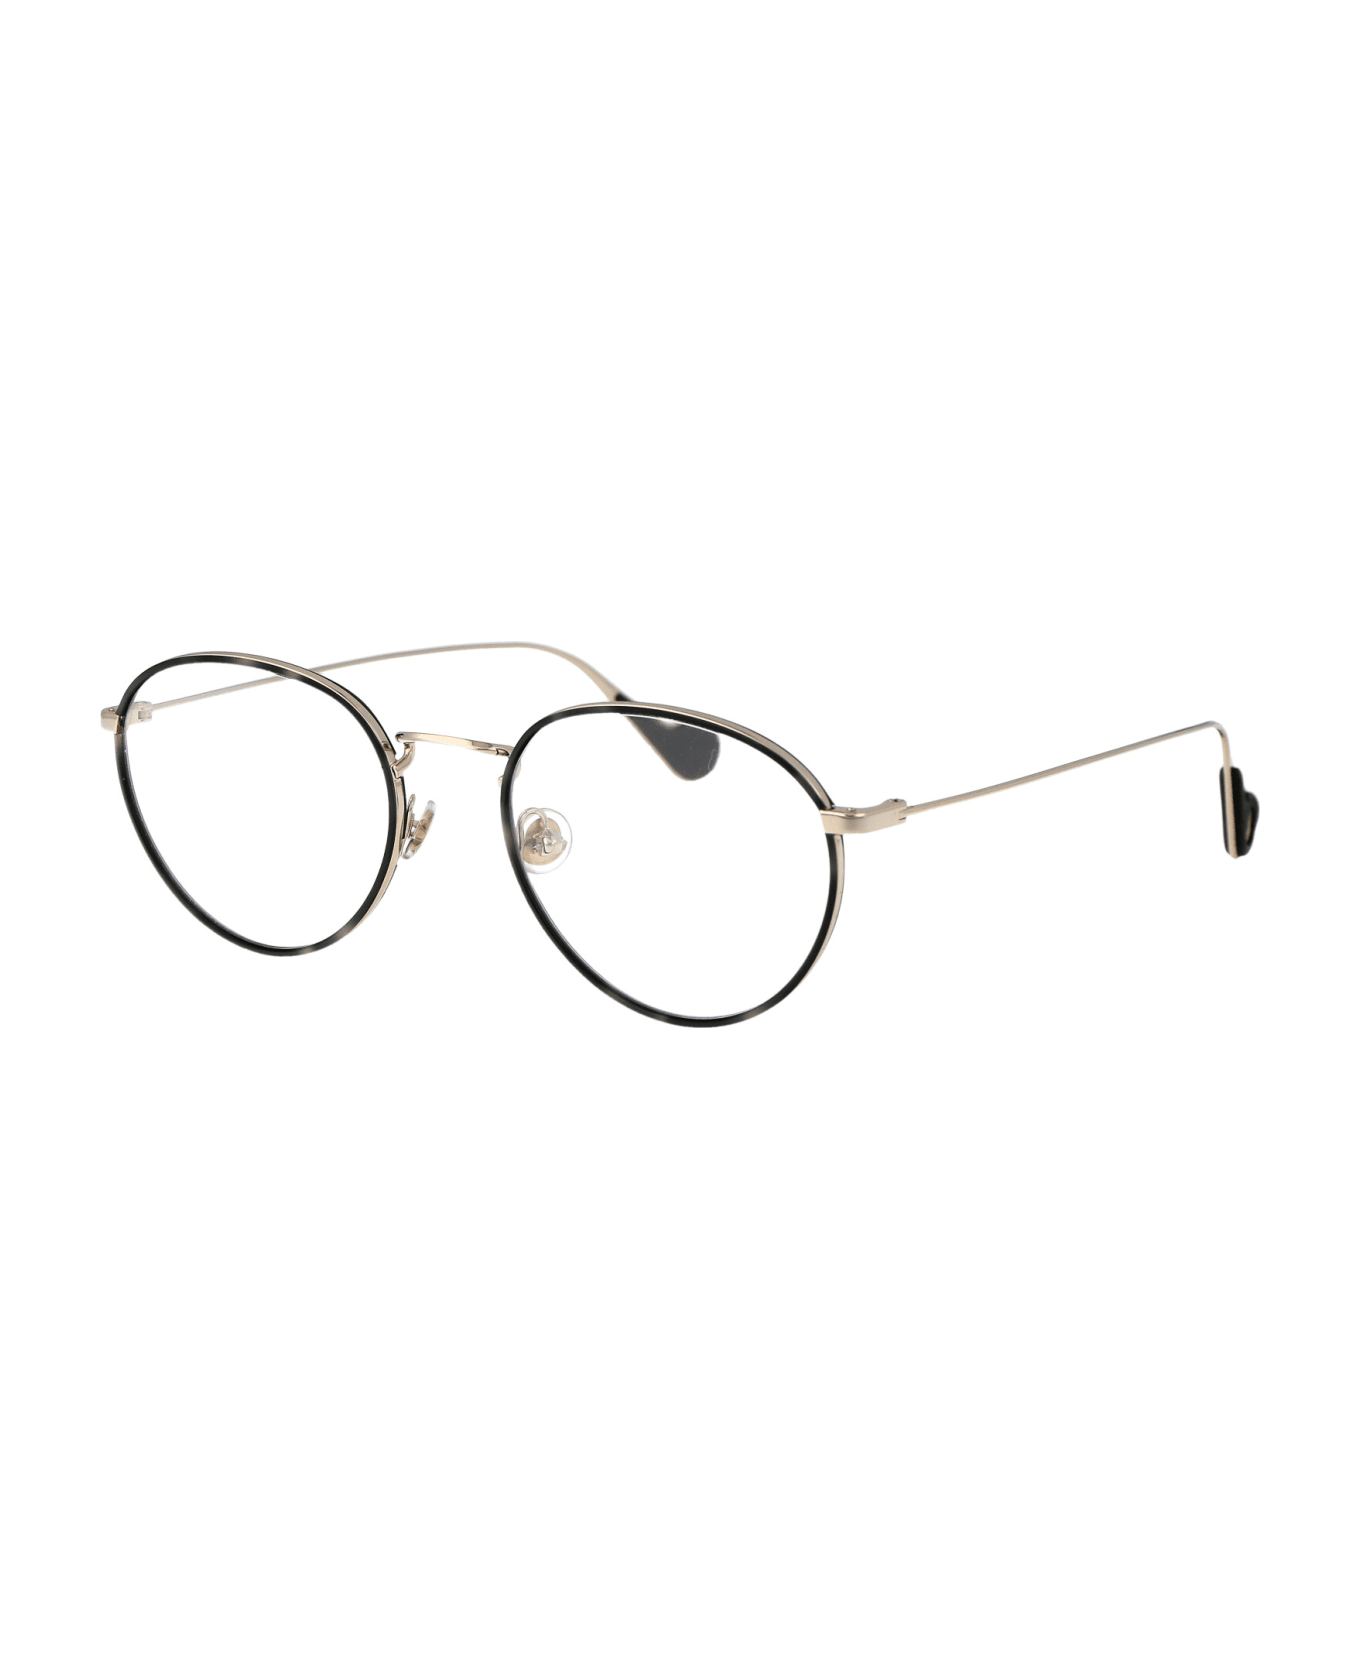 Moncler Eyewear Ml5110 Glasses - 032 Grigio Lucido